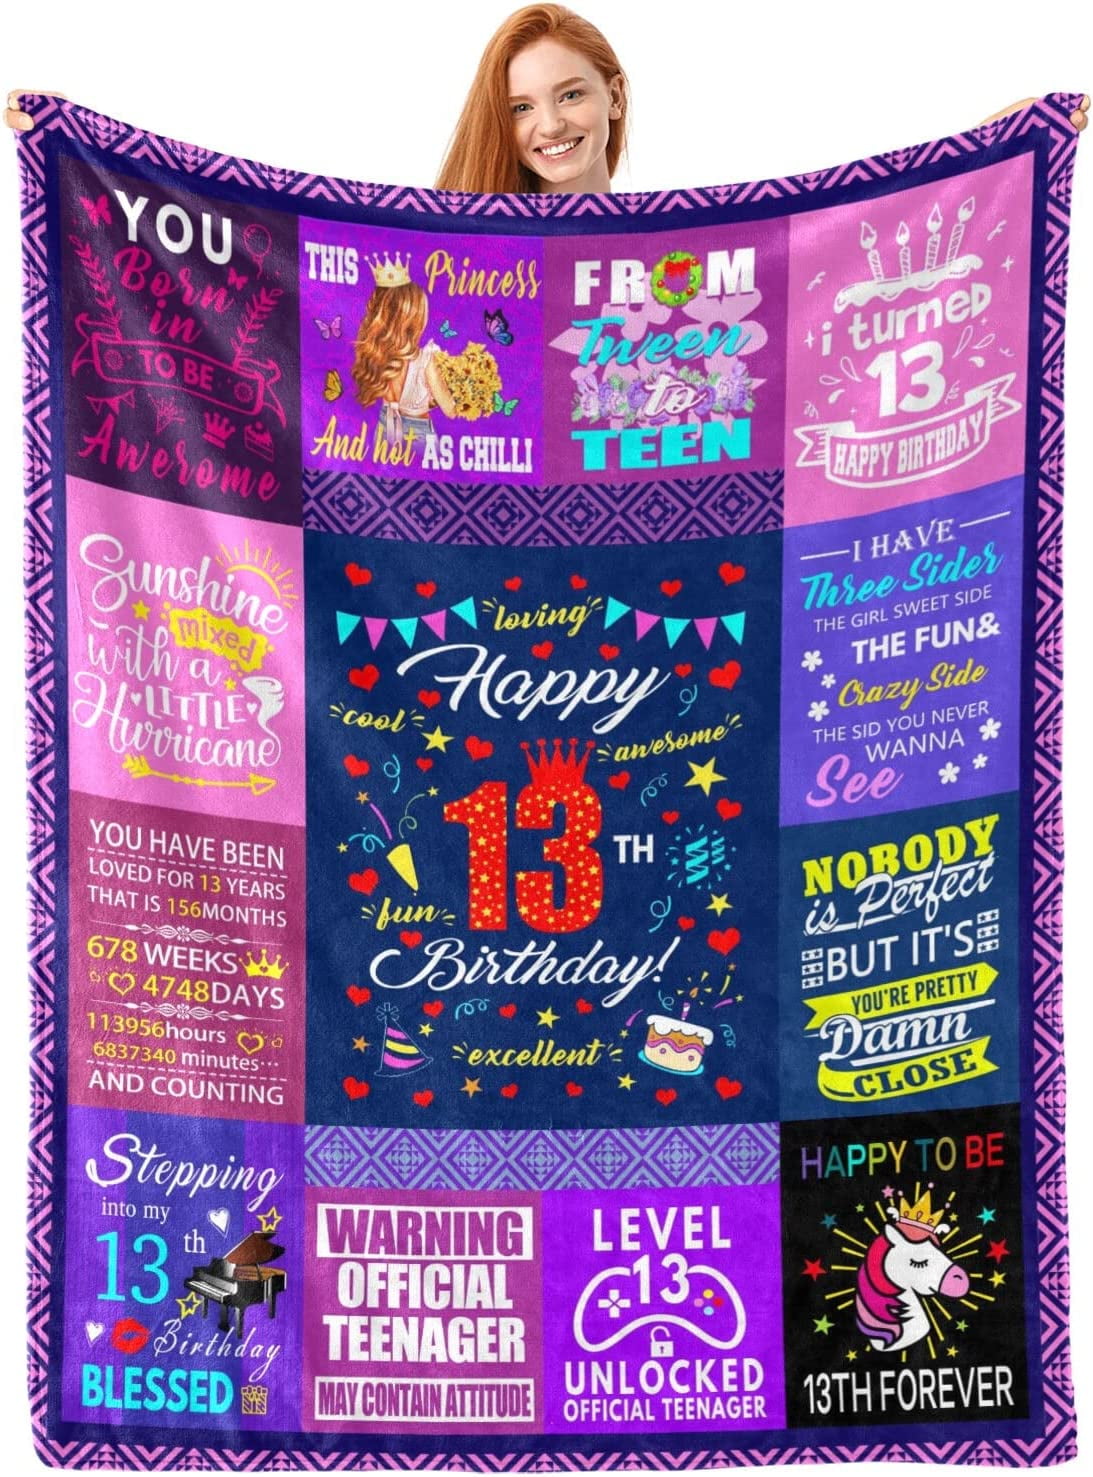  Ryubein 13 Year Old Girl Gift Ideas Blanket, Gifts for 13 Year  Old Girl, 13th Birthday Gifts for Girls, Birthday Gifts for 13 Year Old  Girls, Gifts for 13 Year Old